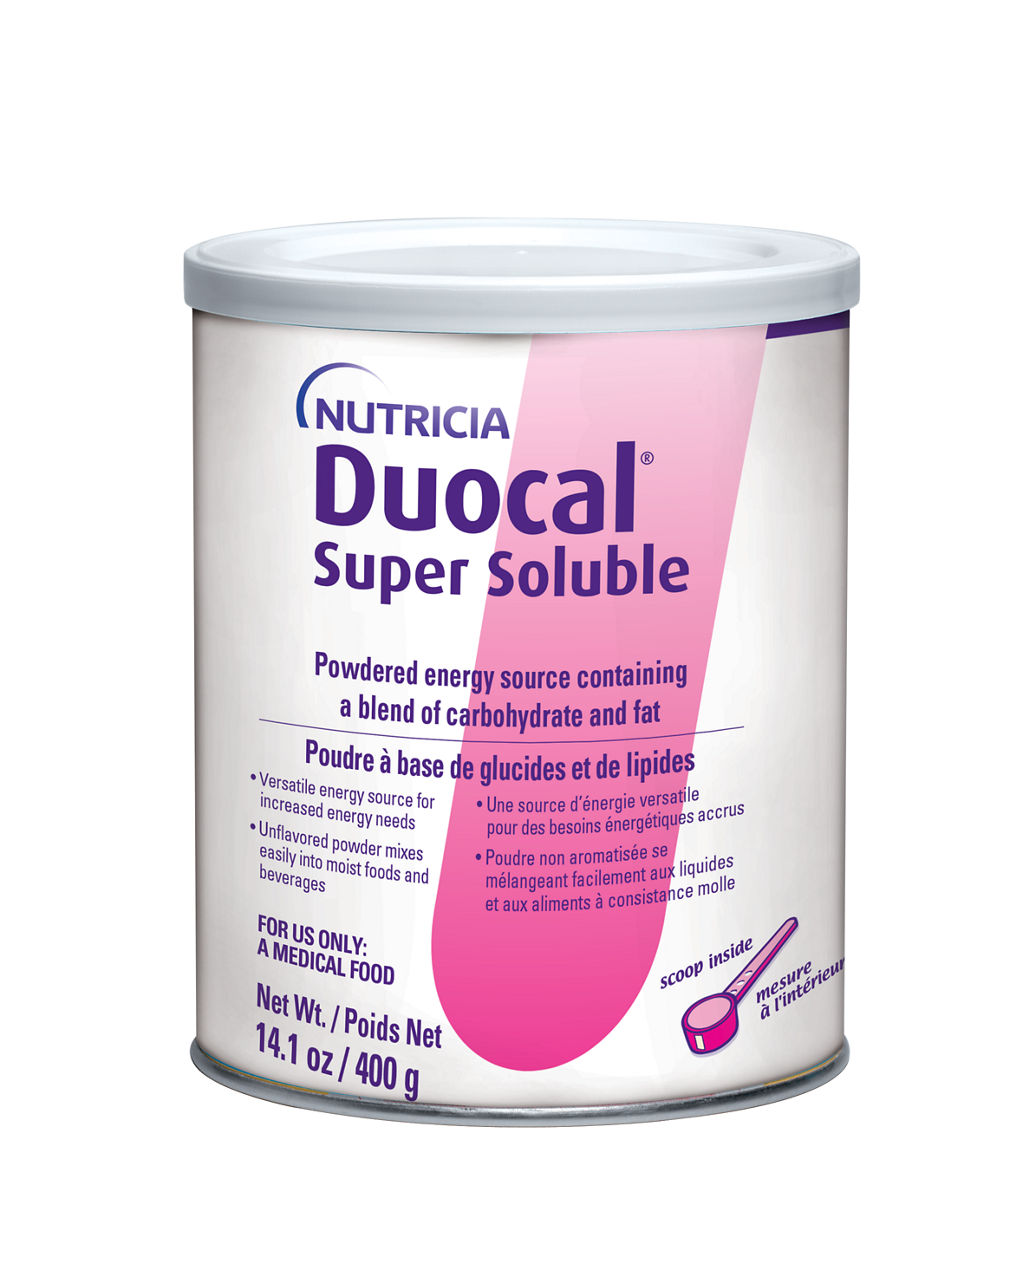 en-GB,Super Soluble Duocal